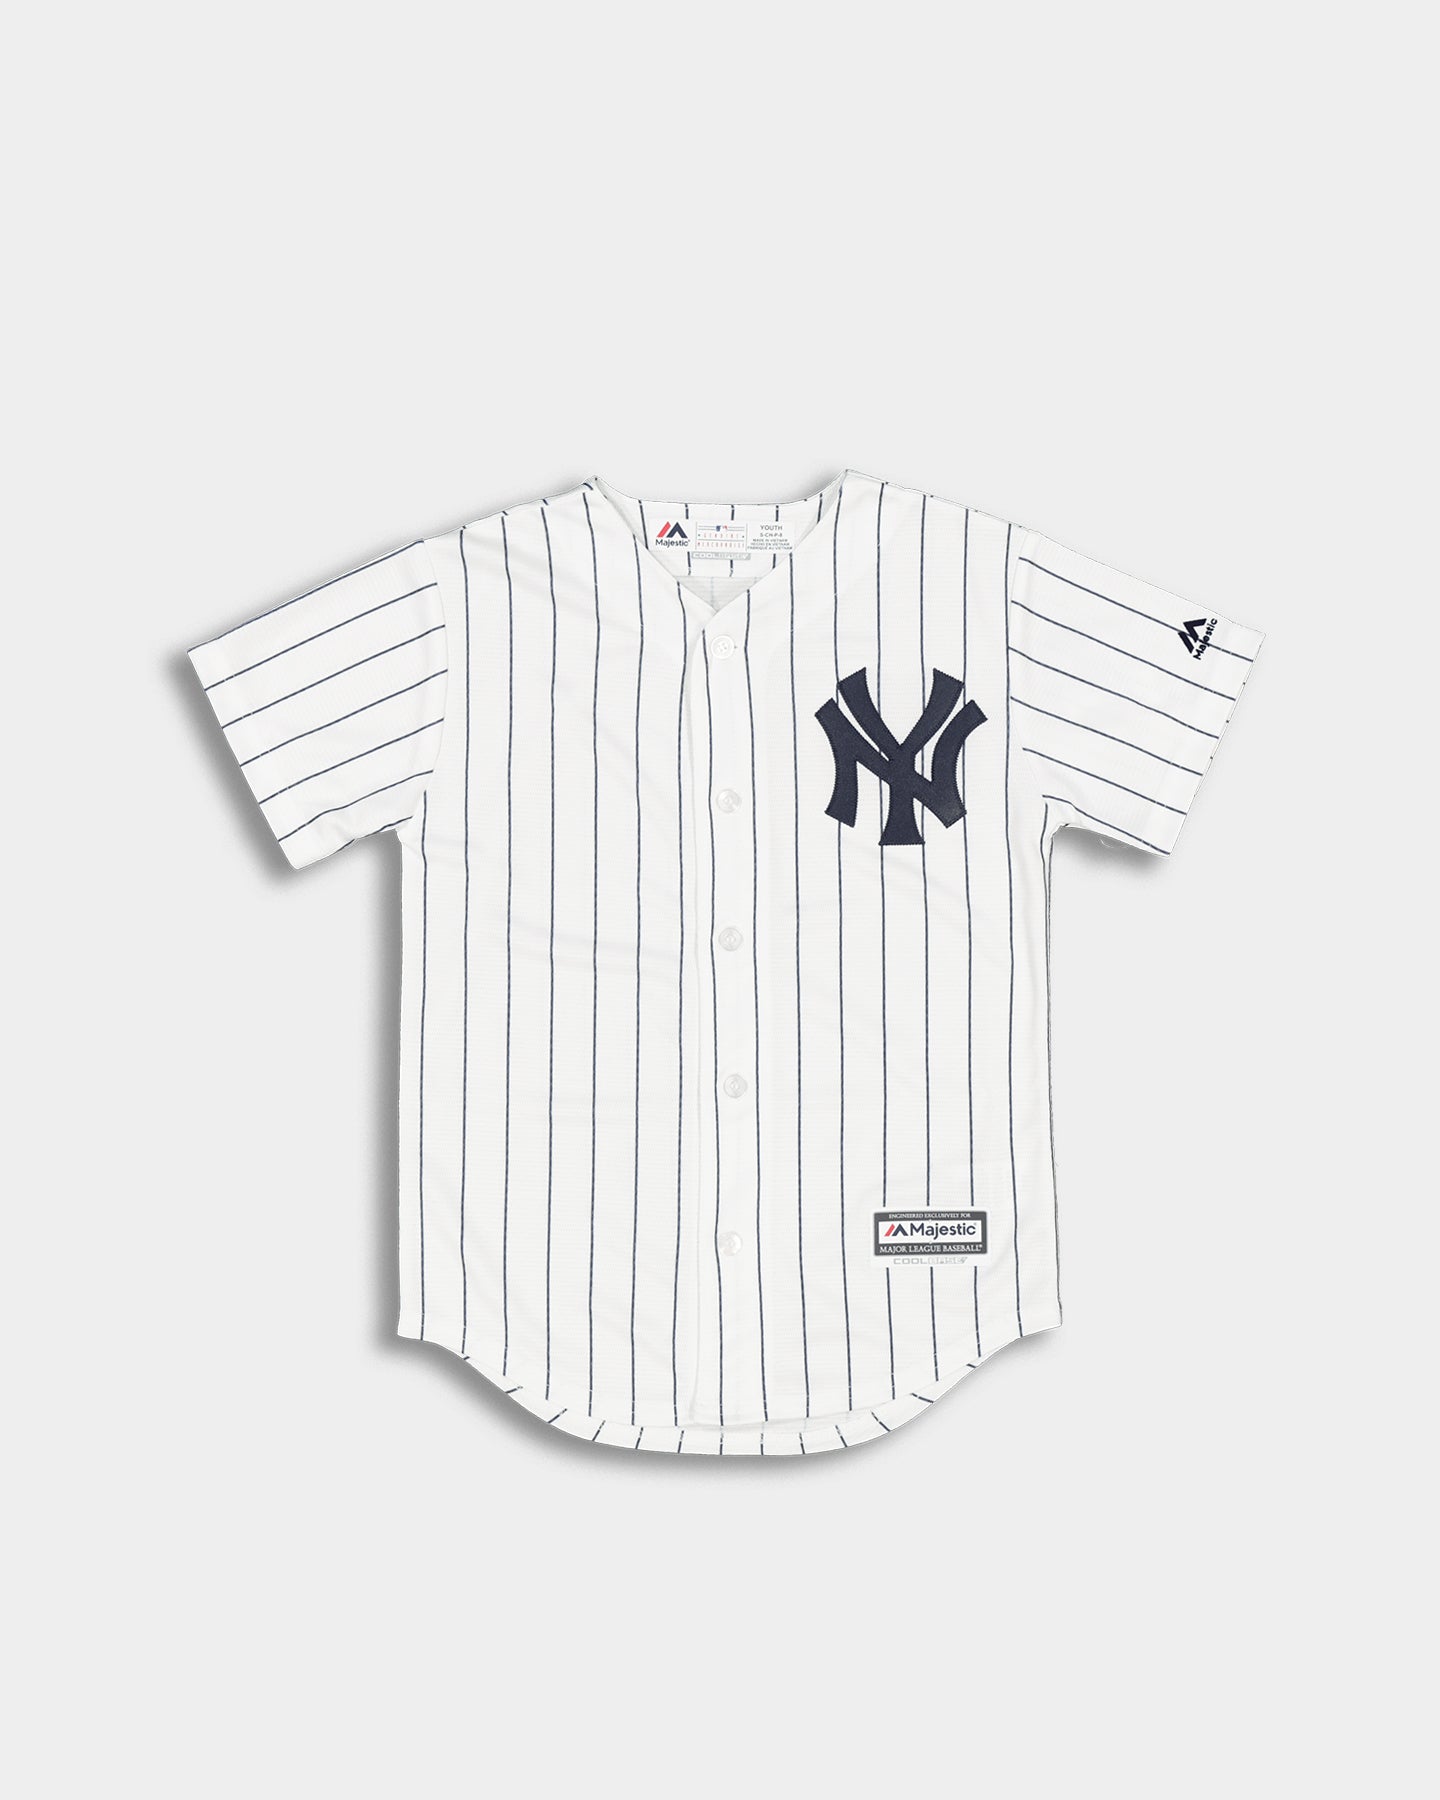 new york yankees replica jersey